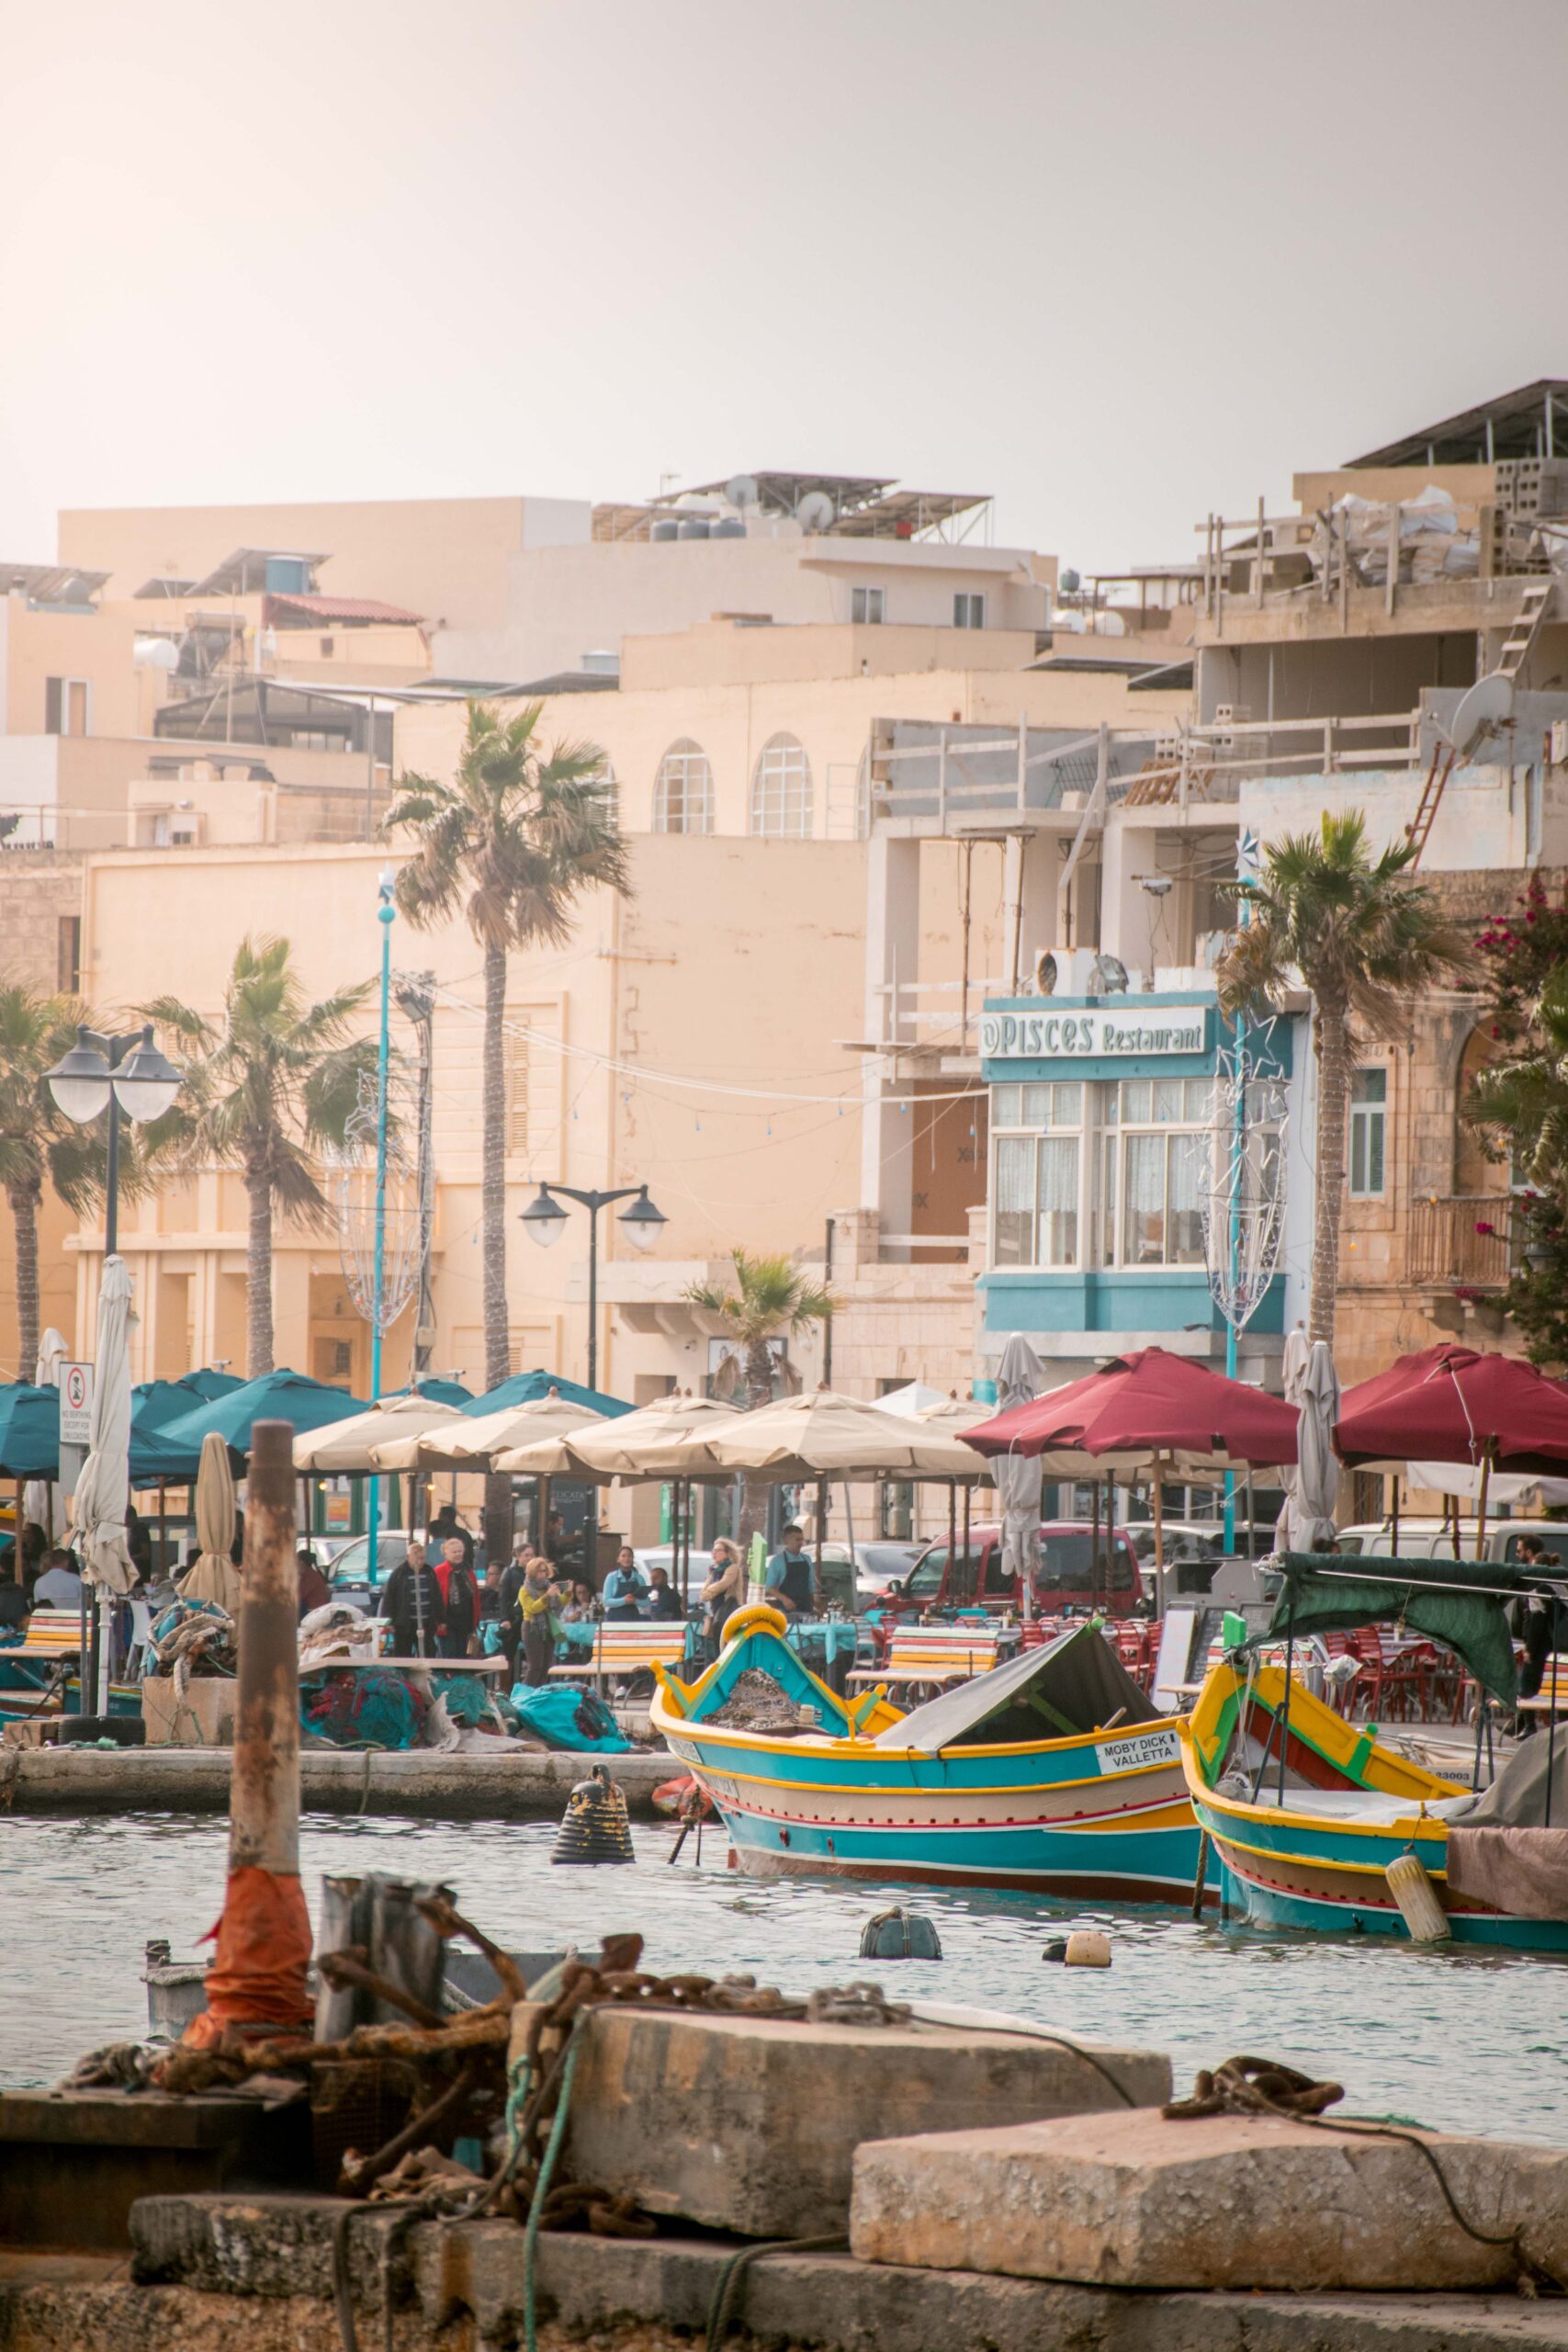 Sunday fish market and traditional colourful luzzu boats near the waterfront of Marsaxlokk, Malta